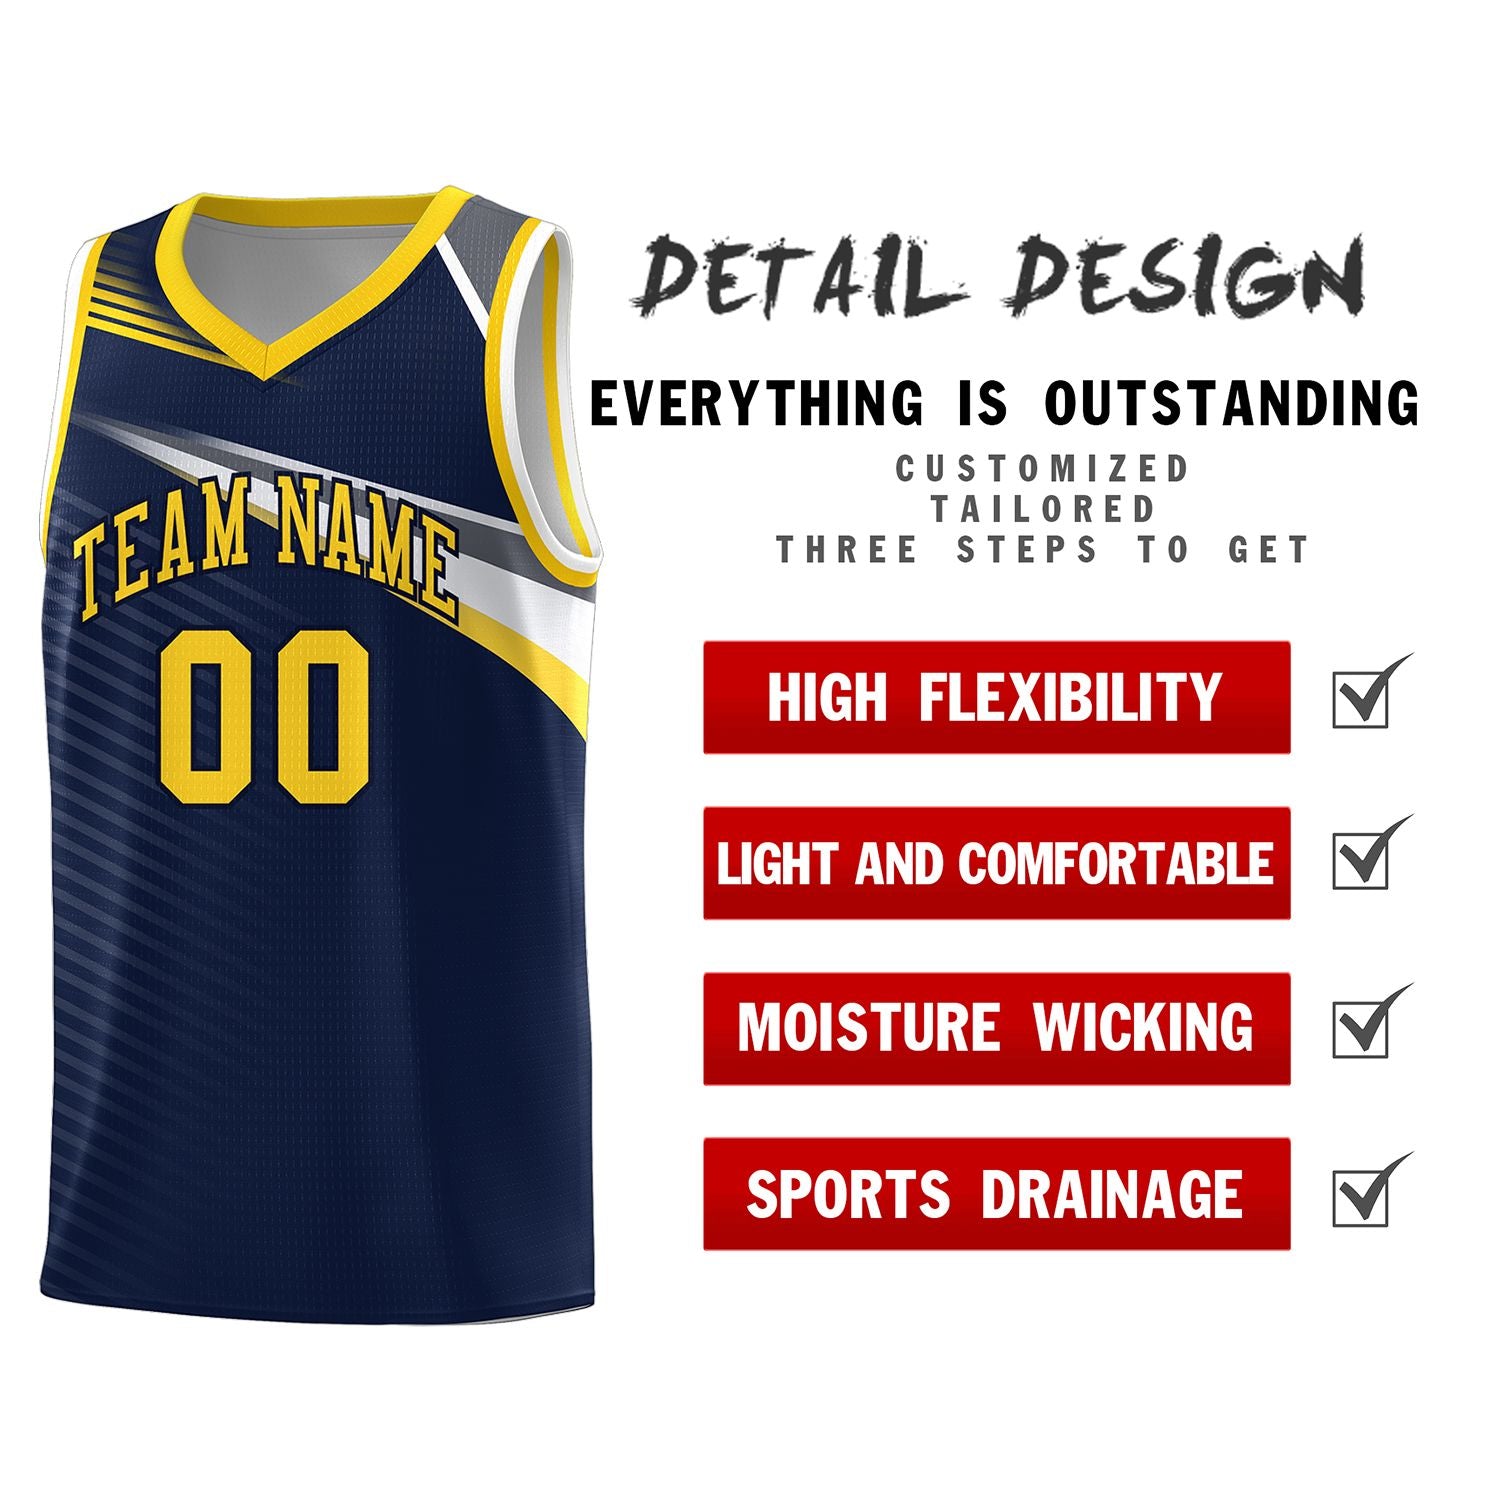 Custom Navy Gold-Navy Chest Color Block Sports Uniform Basketball Jersey